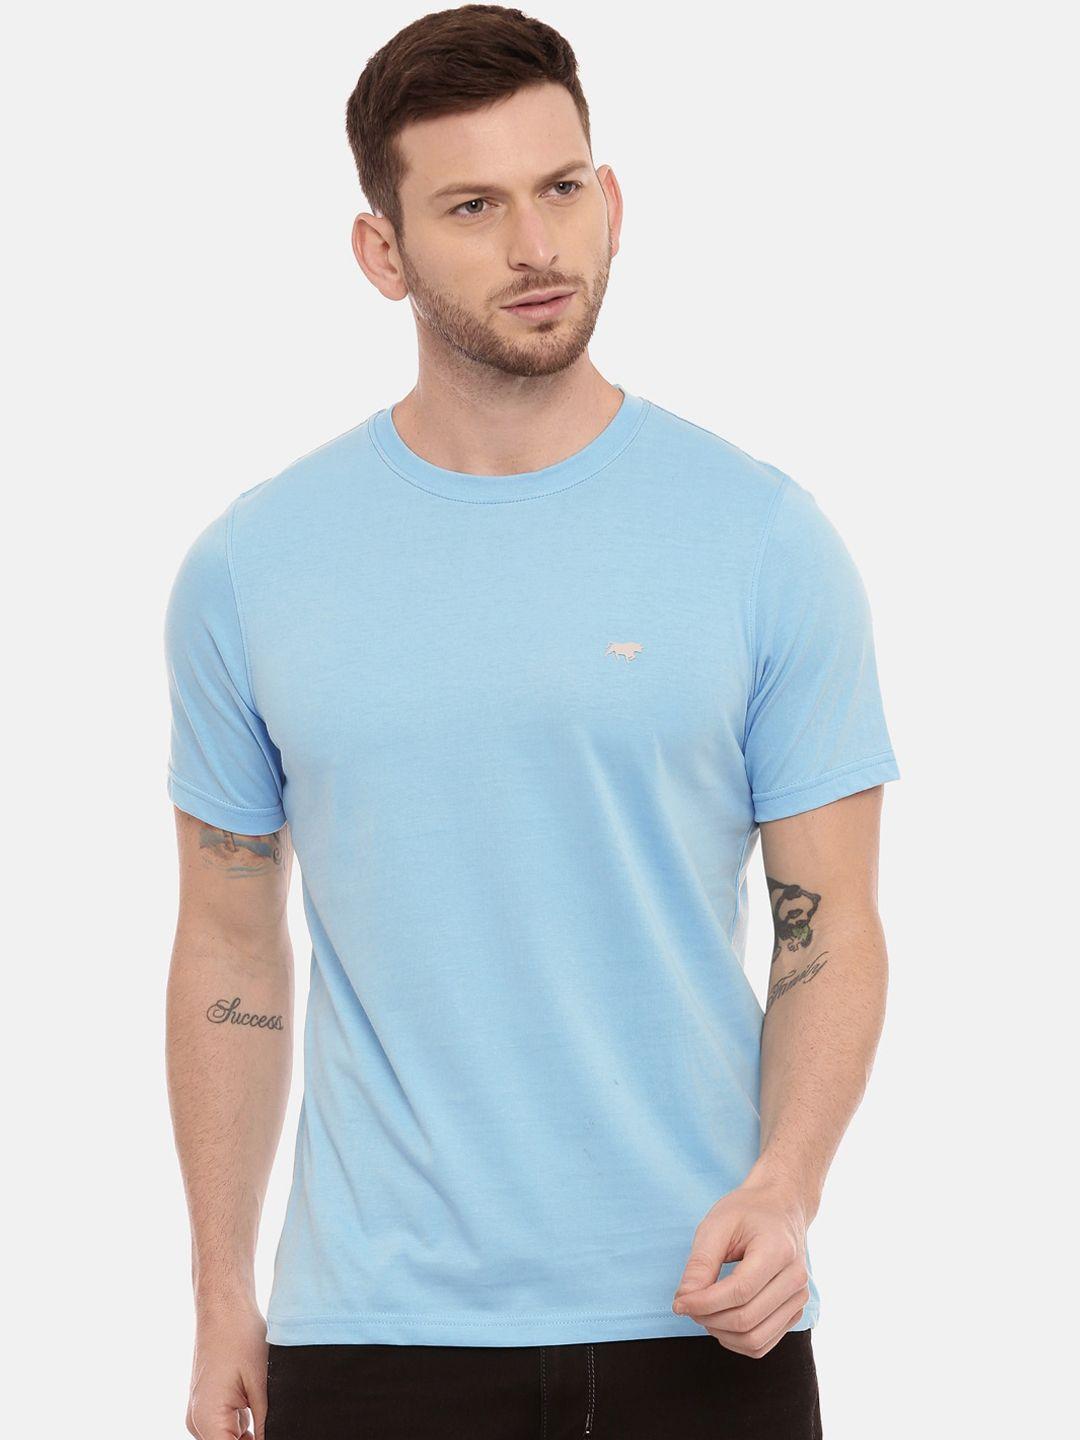 bushirt men blue solid round neck t-shirt